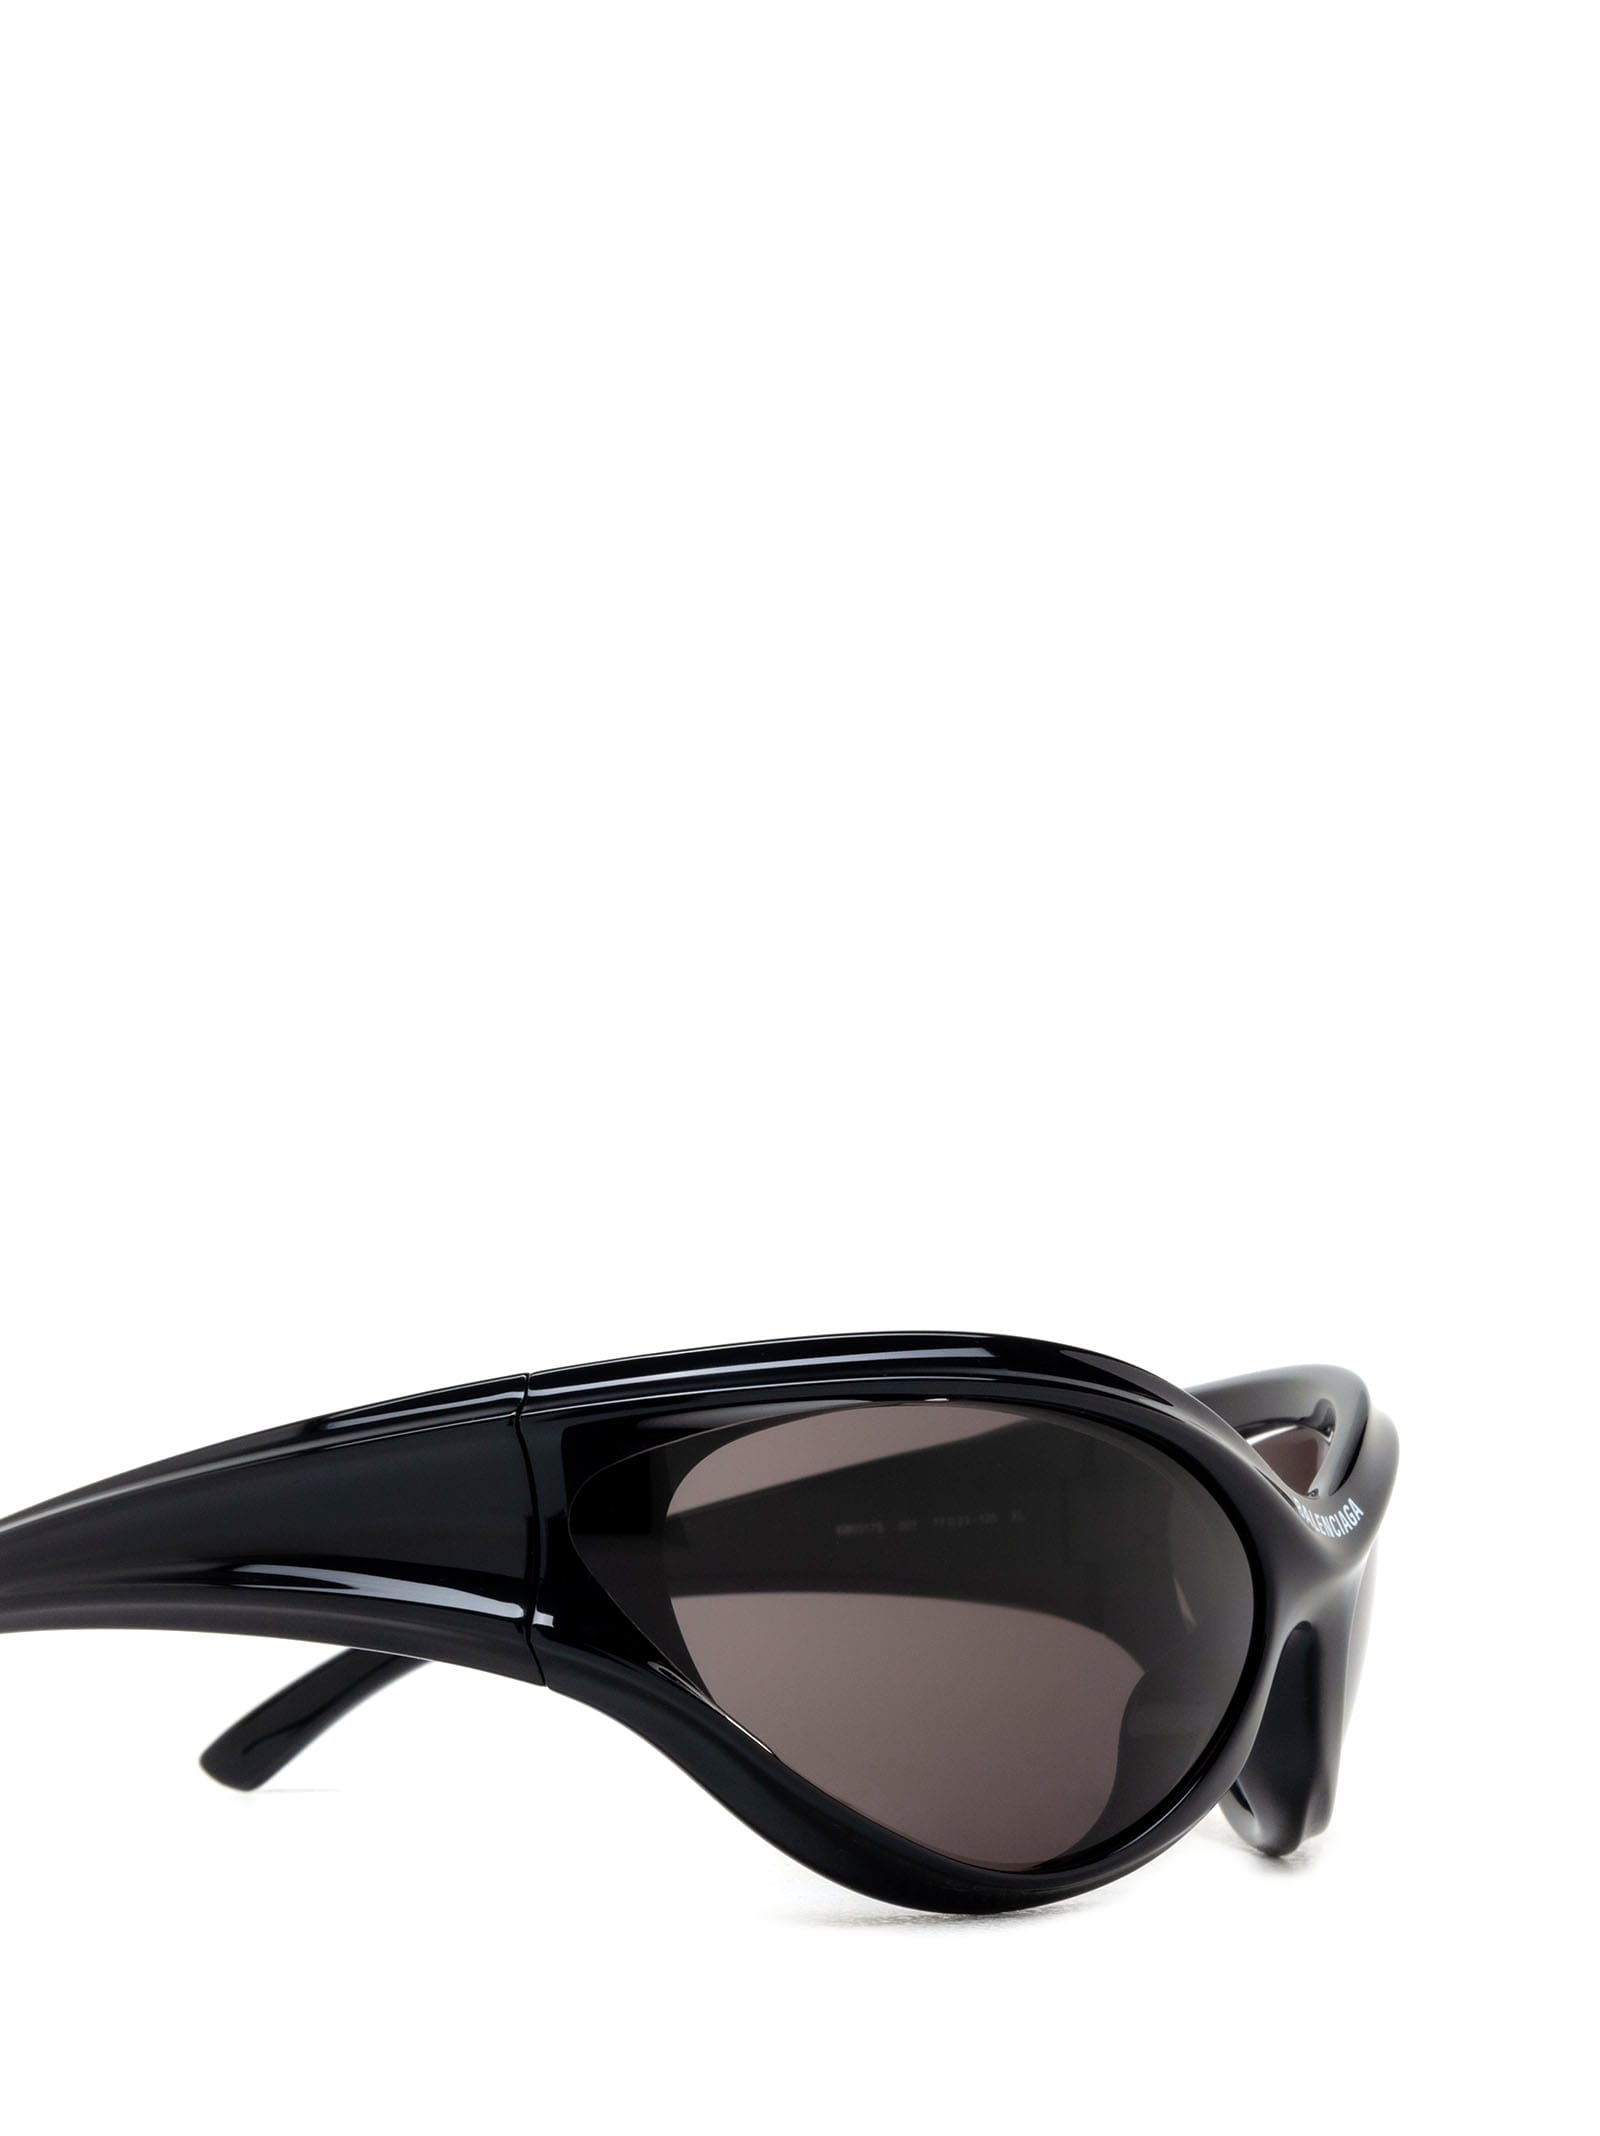 Shop Balenciaga Bb0317s Black Sunglasses